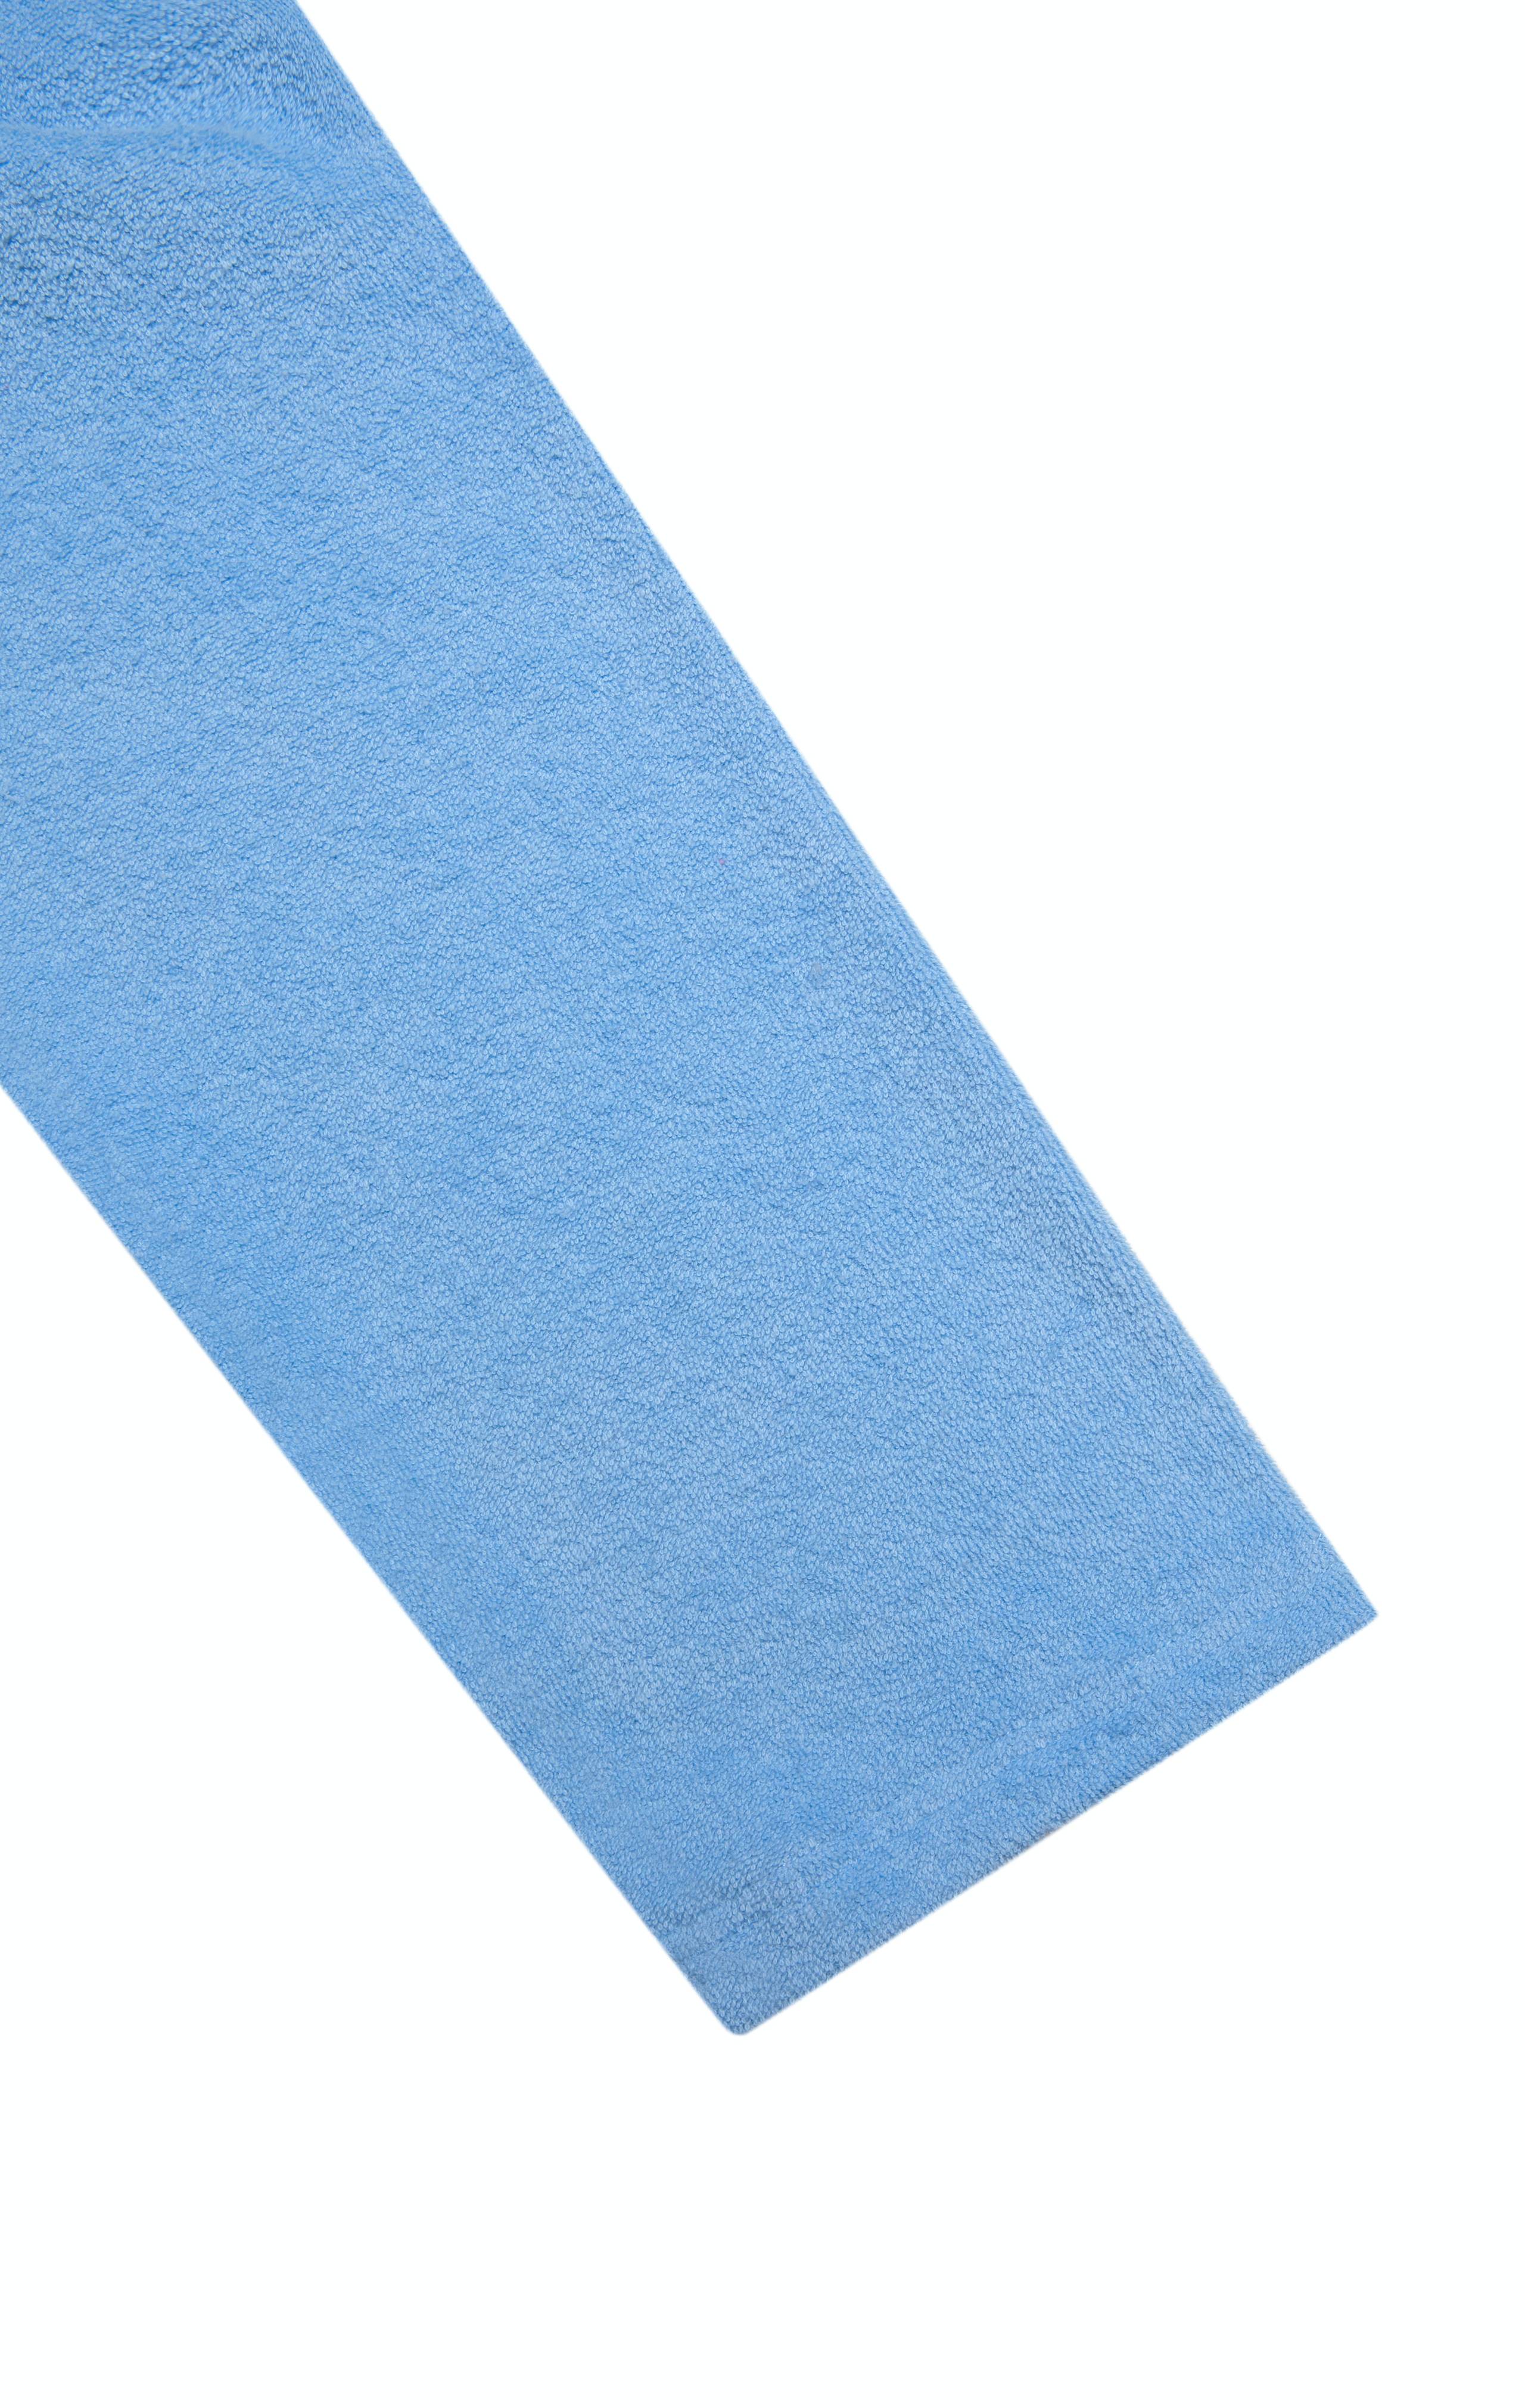 Onepiece Towel Club X Onepiece Towel Jumpsuit Mid Blue - 5